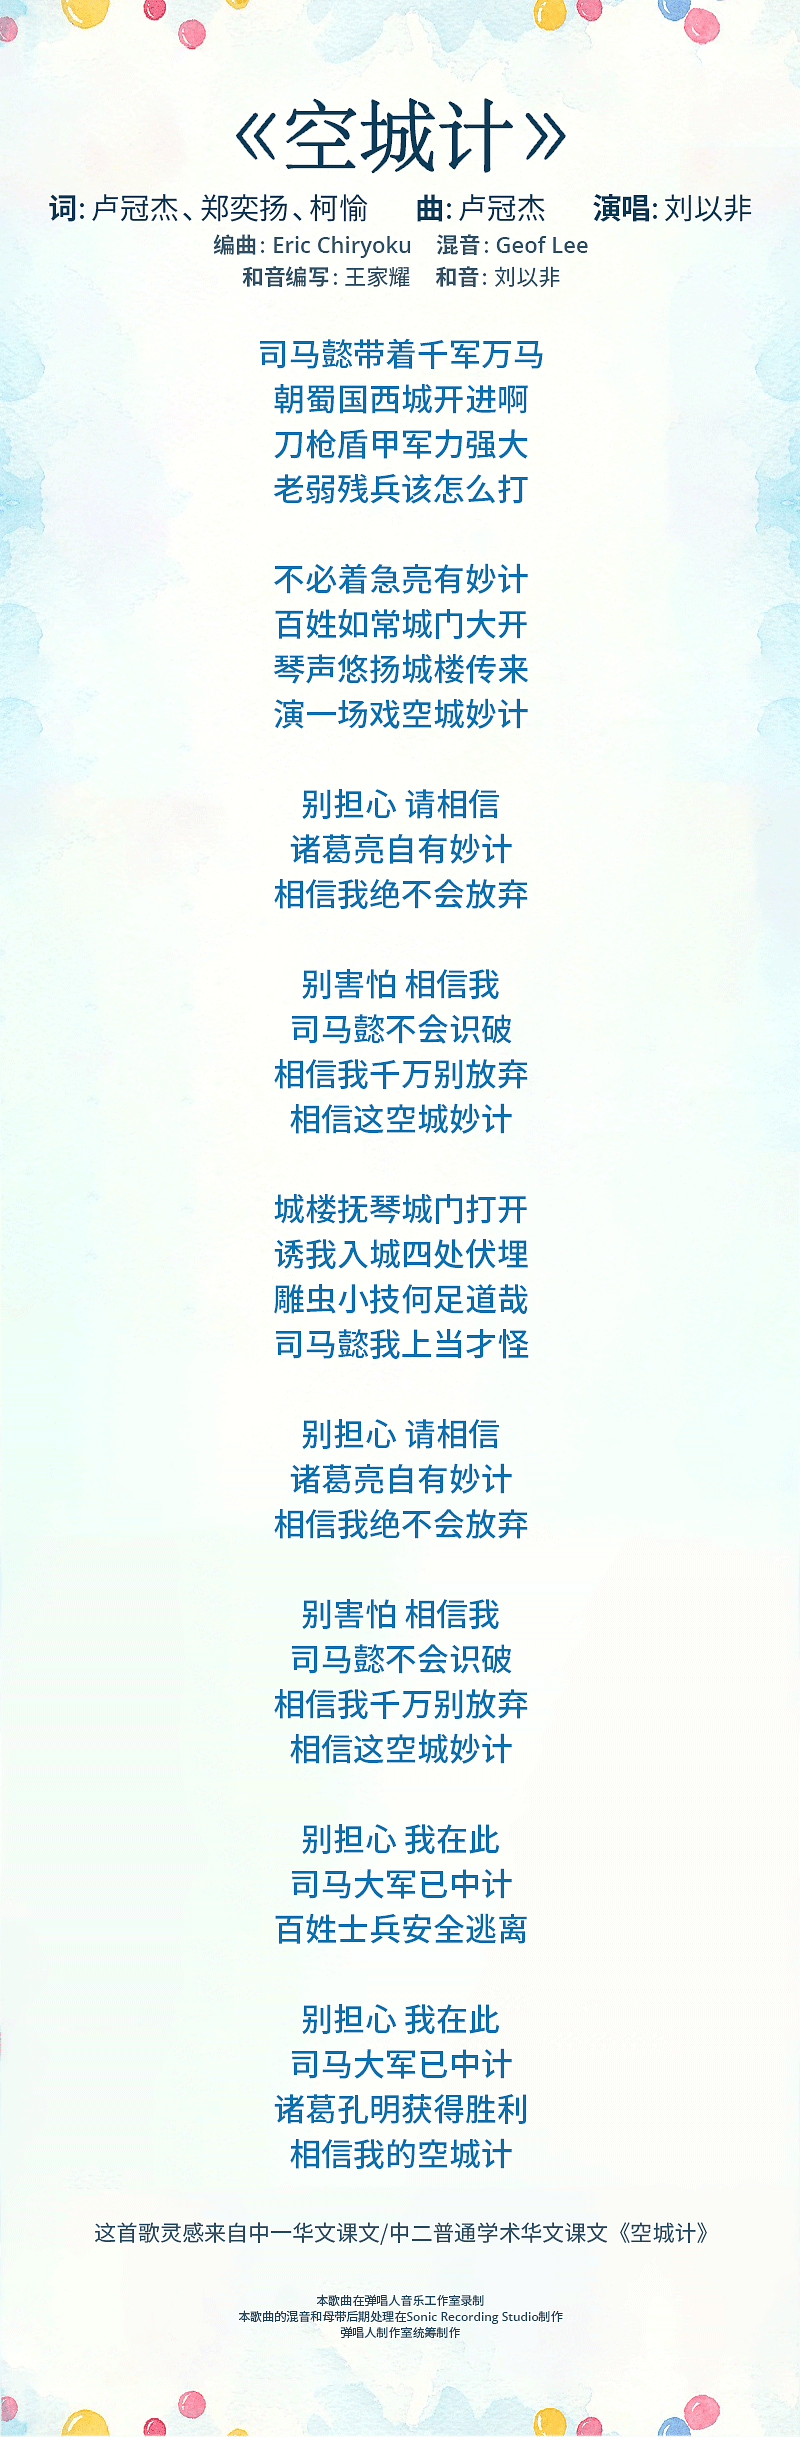 kong-cheng-ji-lyrics-mobile.png